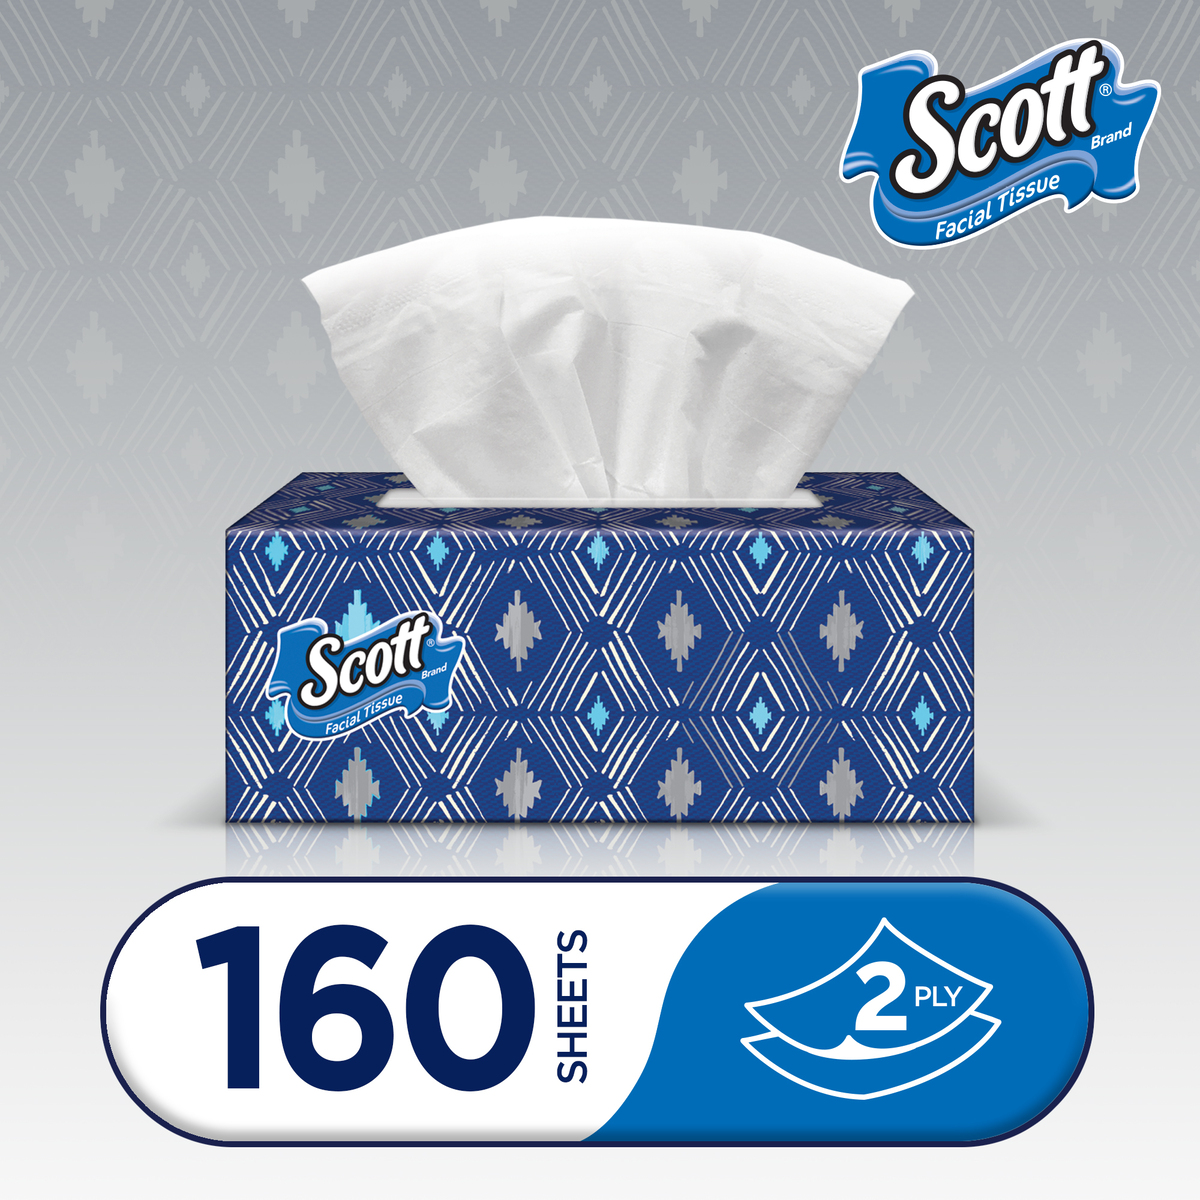 Scott Plus Facial Tissue 2ply 5 x 160 Sheets